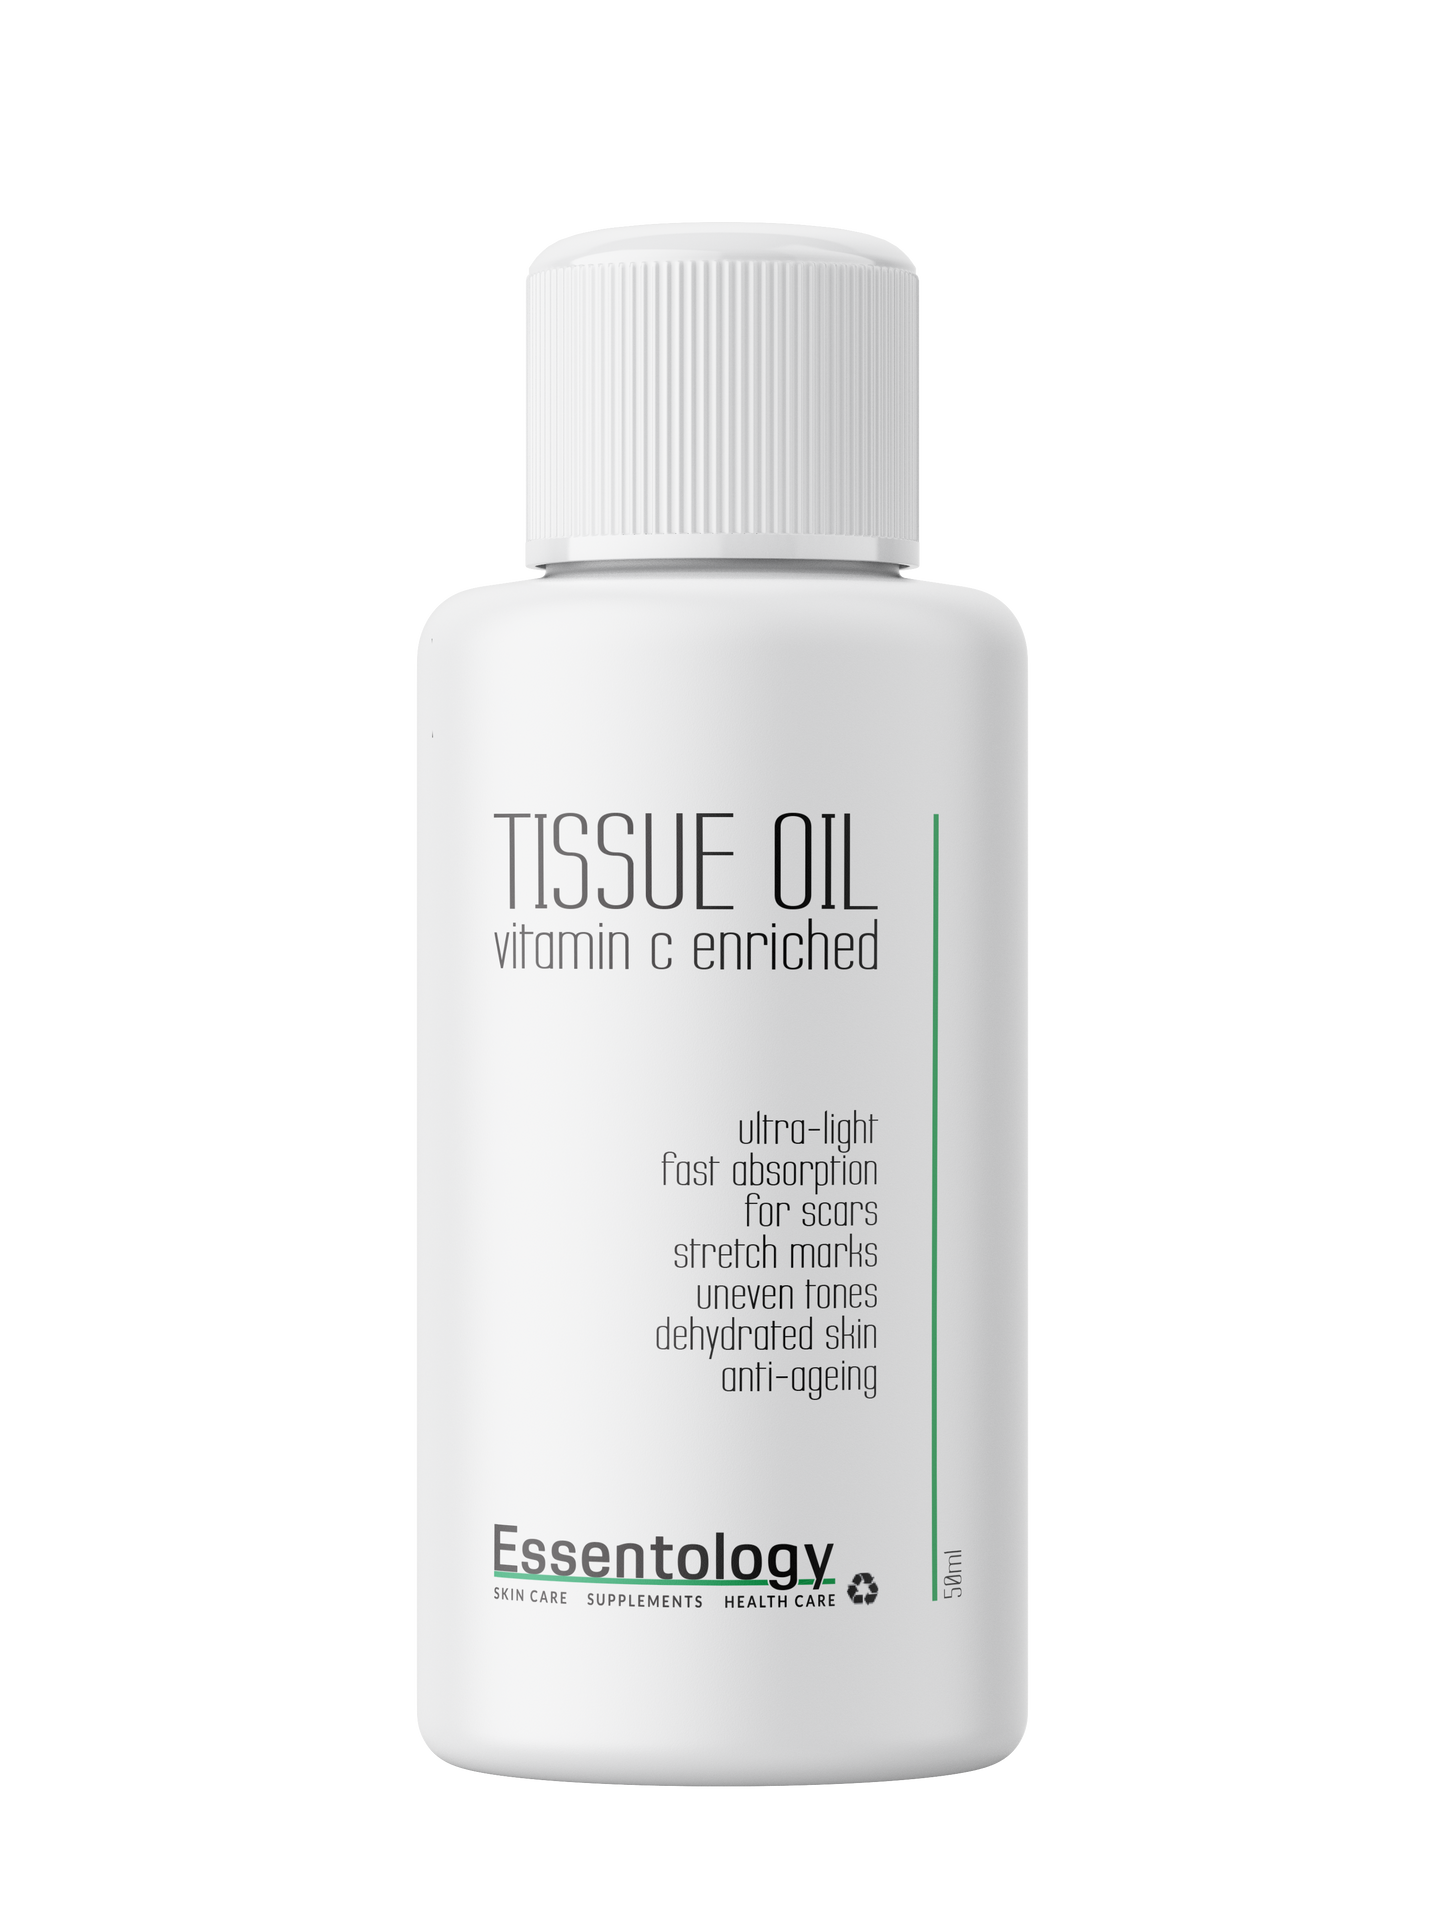 Essentology - Tissue Oil Vitamin C Enriched